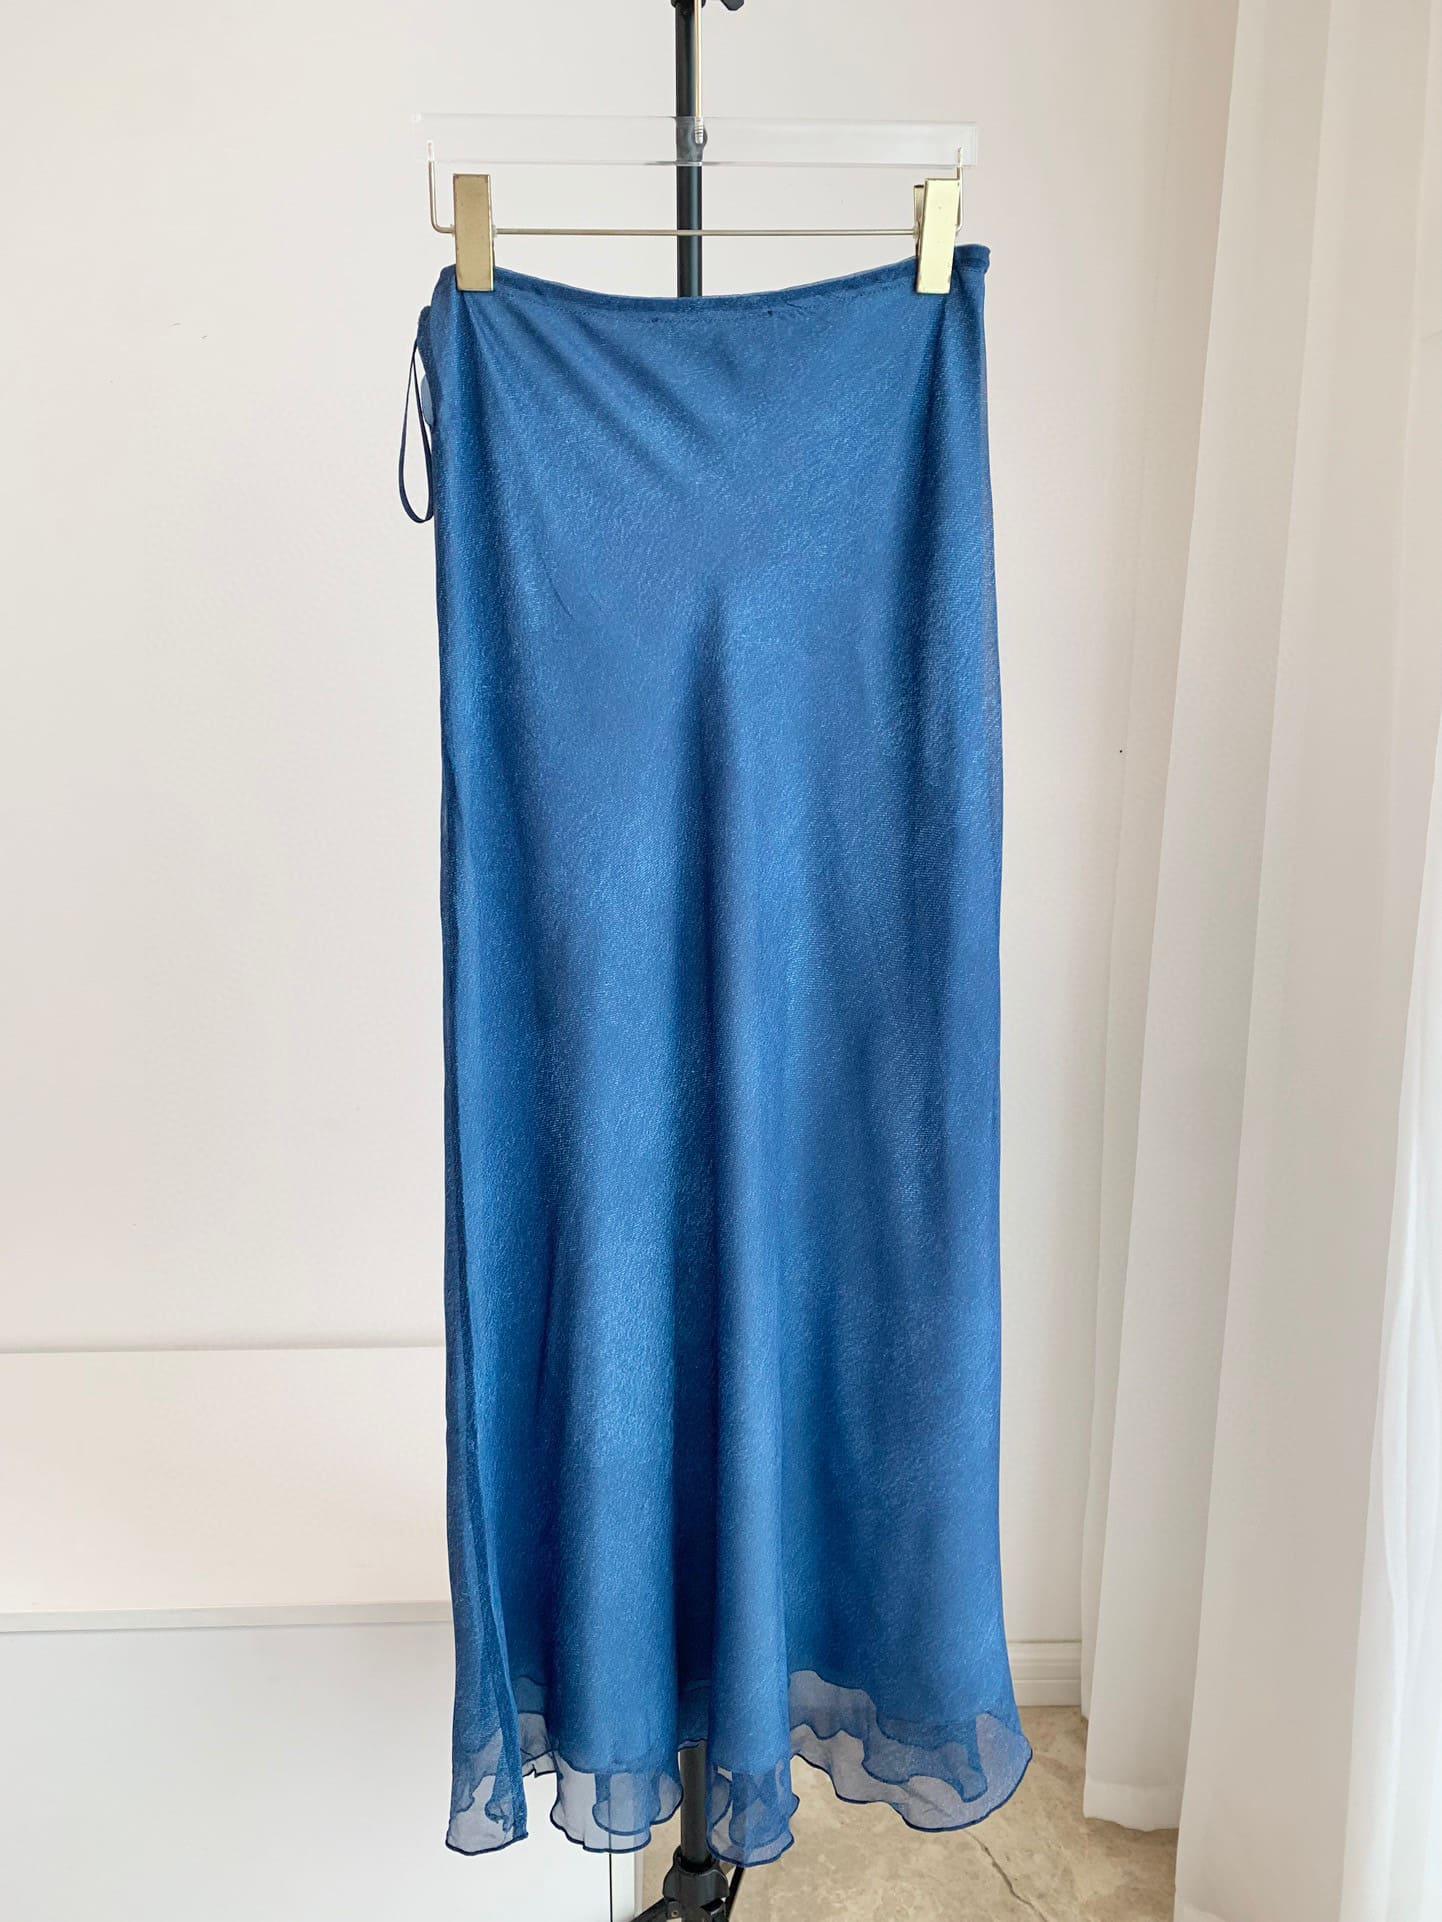 100% Silk blue vacation dress | EnerChic ™ - EnerChic